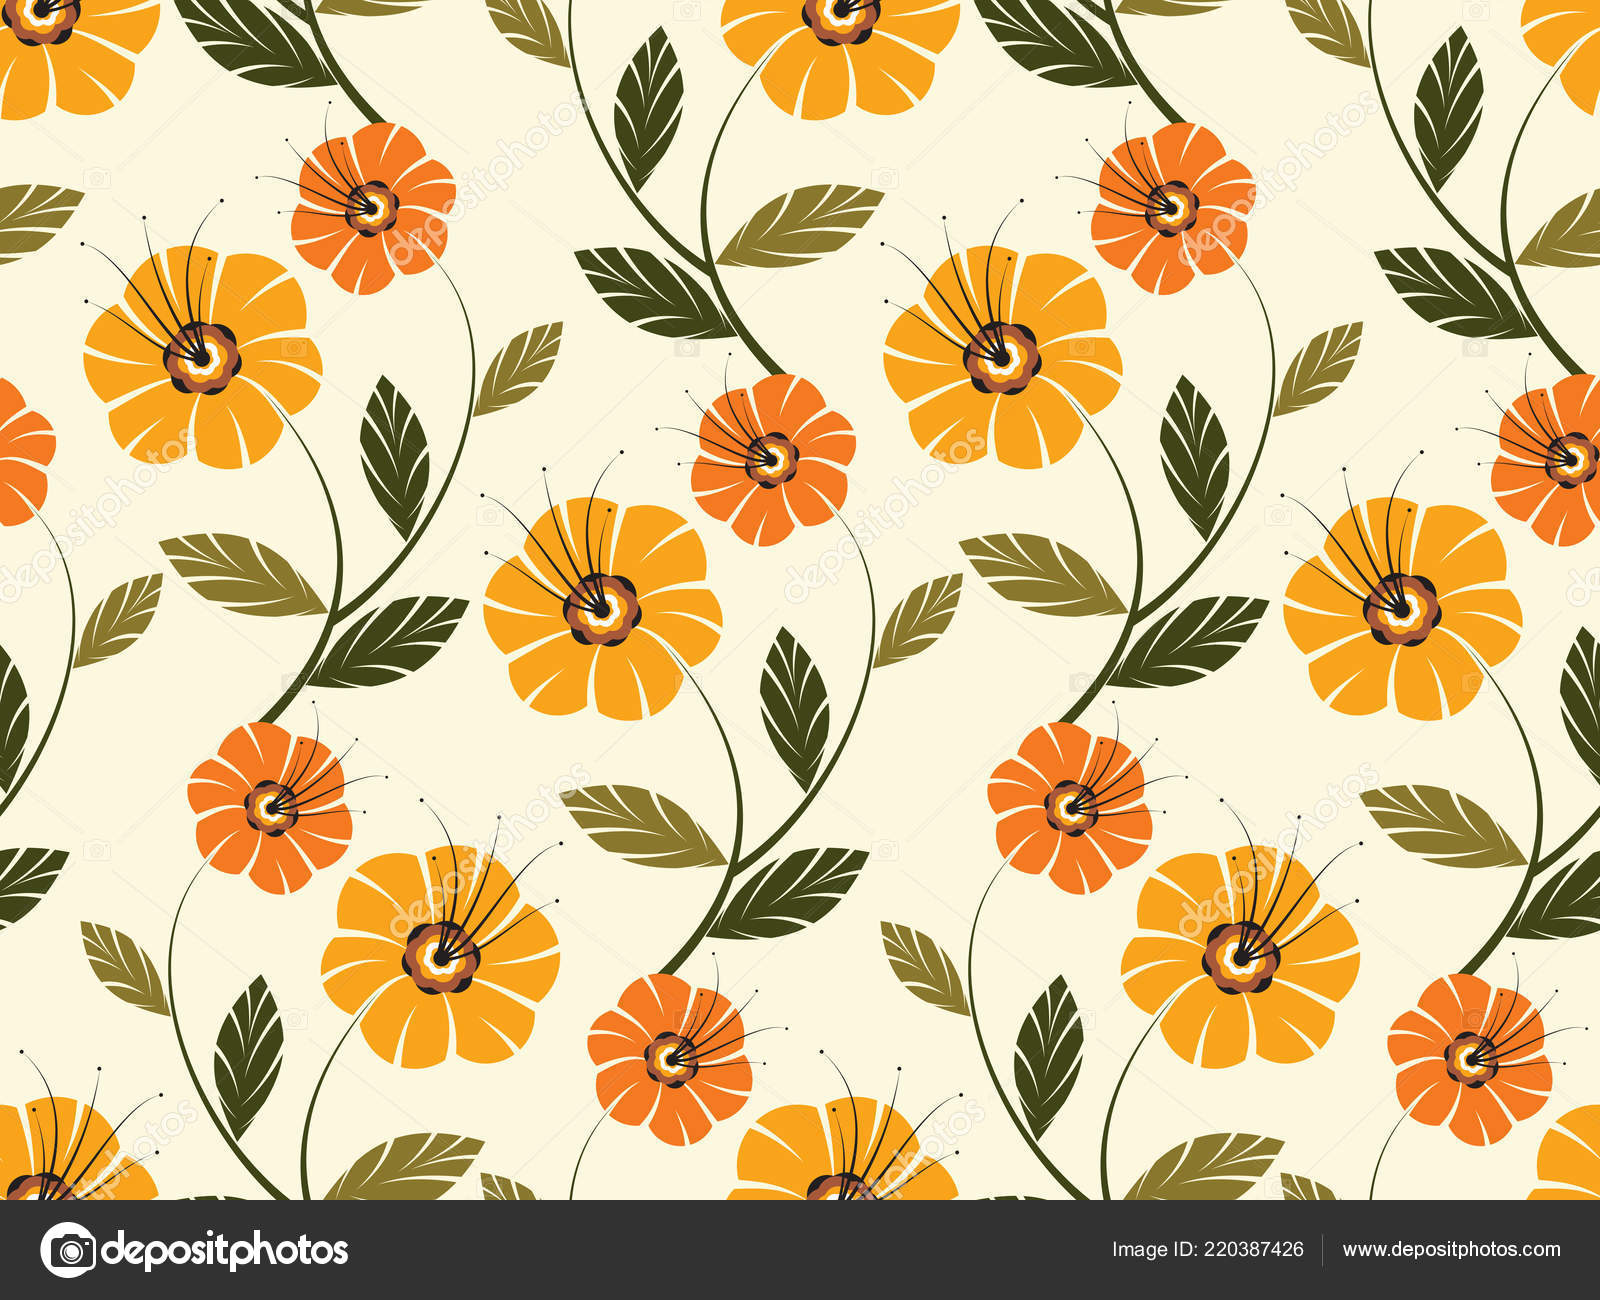 https://st4.depositphotos.com/1596326/22038/v/1600/depositphotos_220387426-stock-illustration-seamless-cute-floral-pattern.jpg